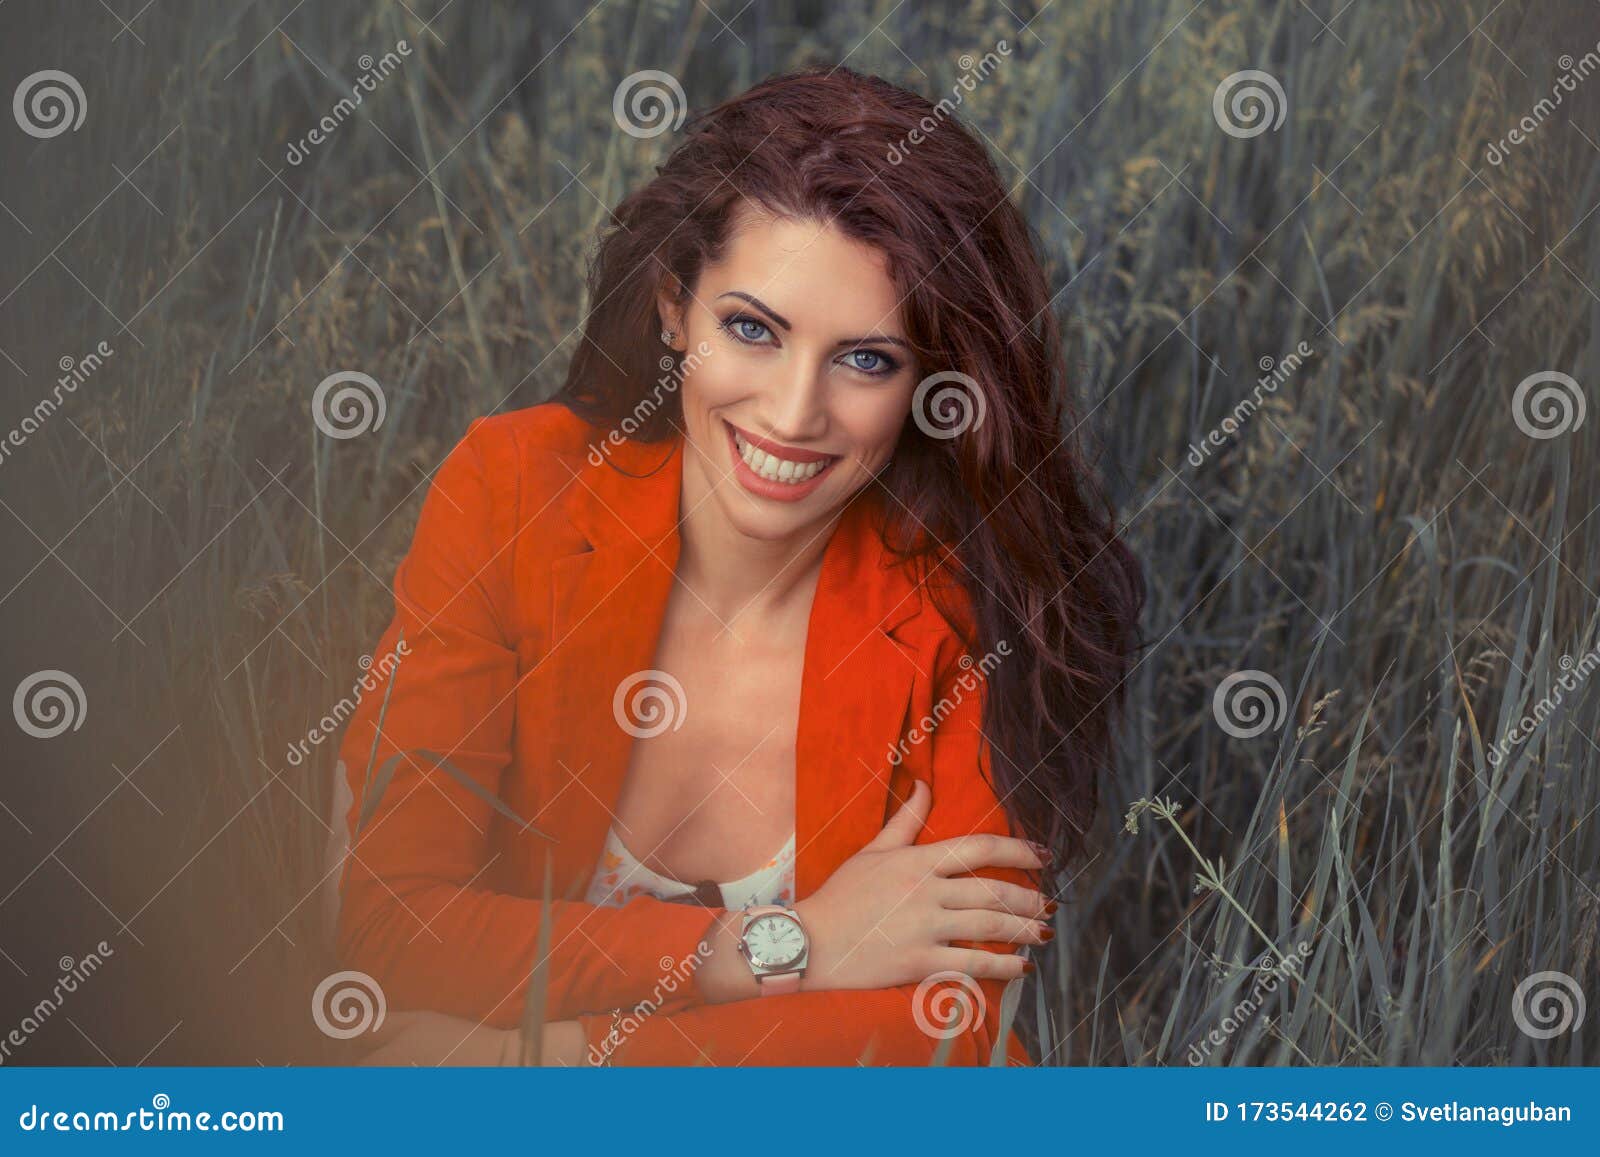 Cheerful girl on wheat field | Stock Photo | Colourbox